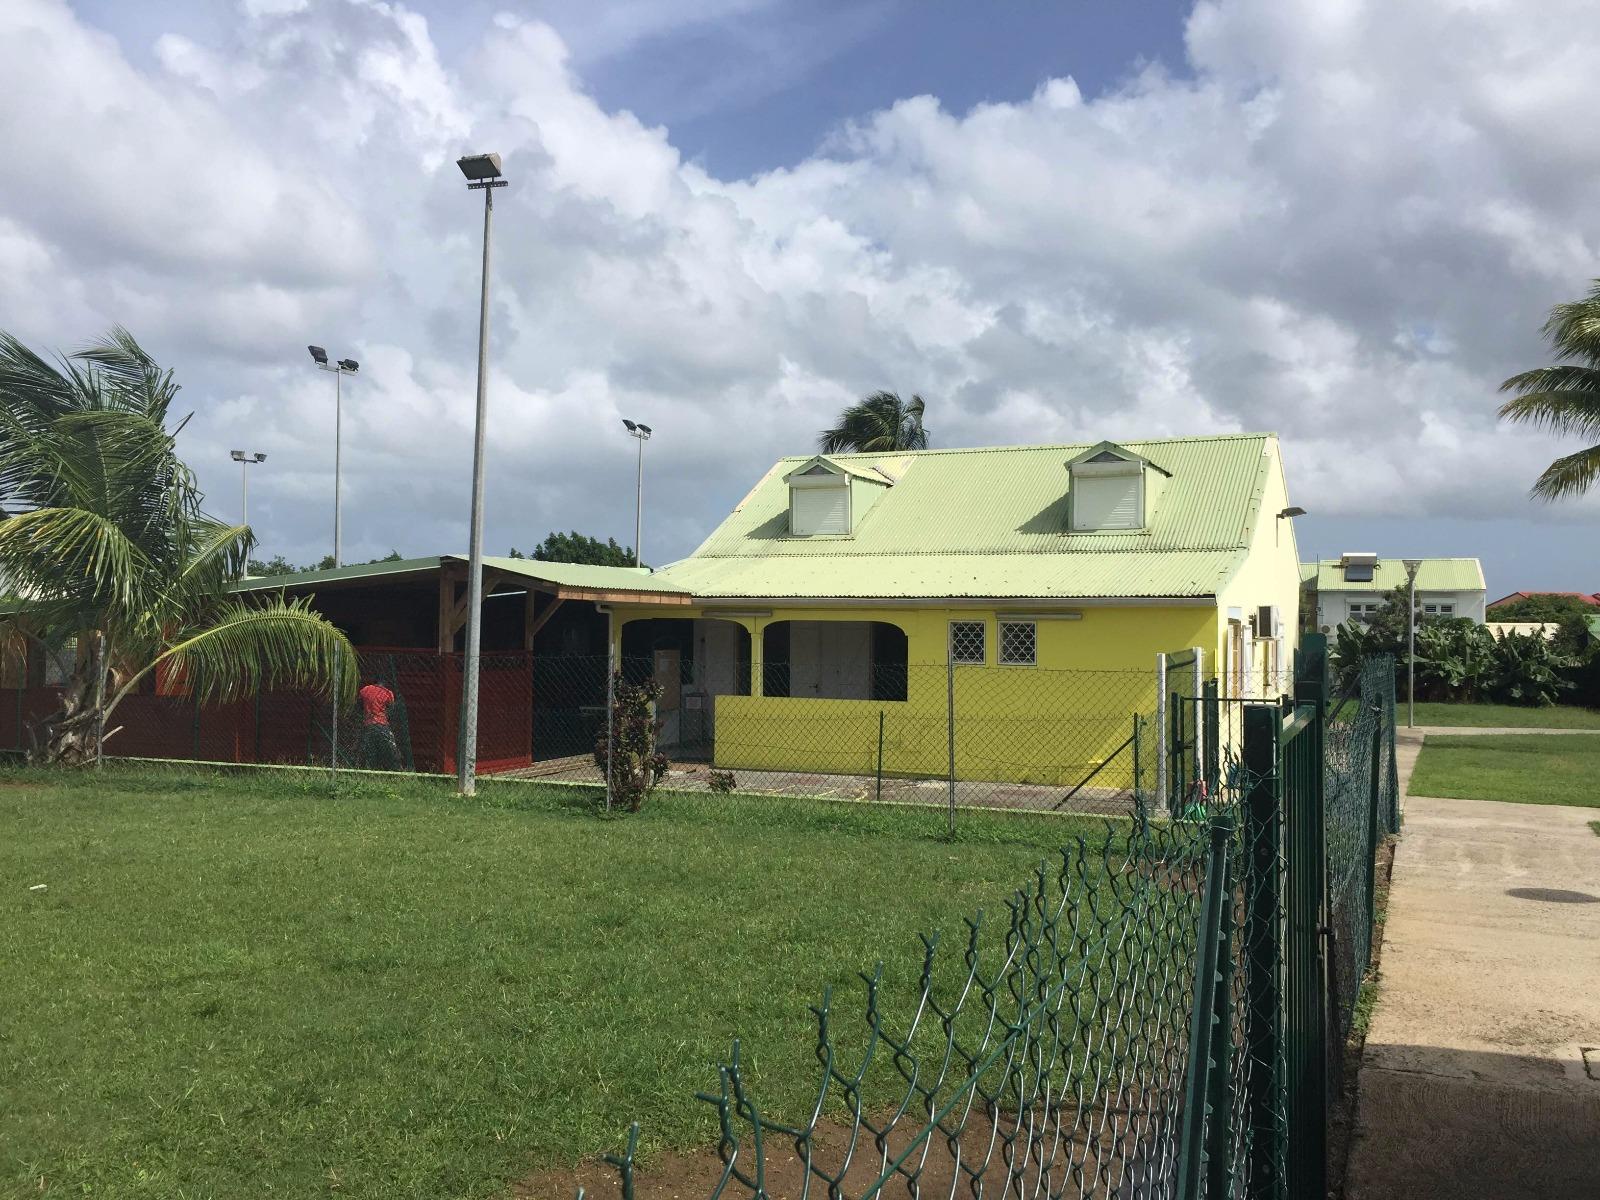 Karuk School à Baie-Mahault en Guadeloupe